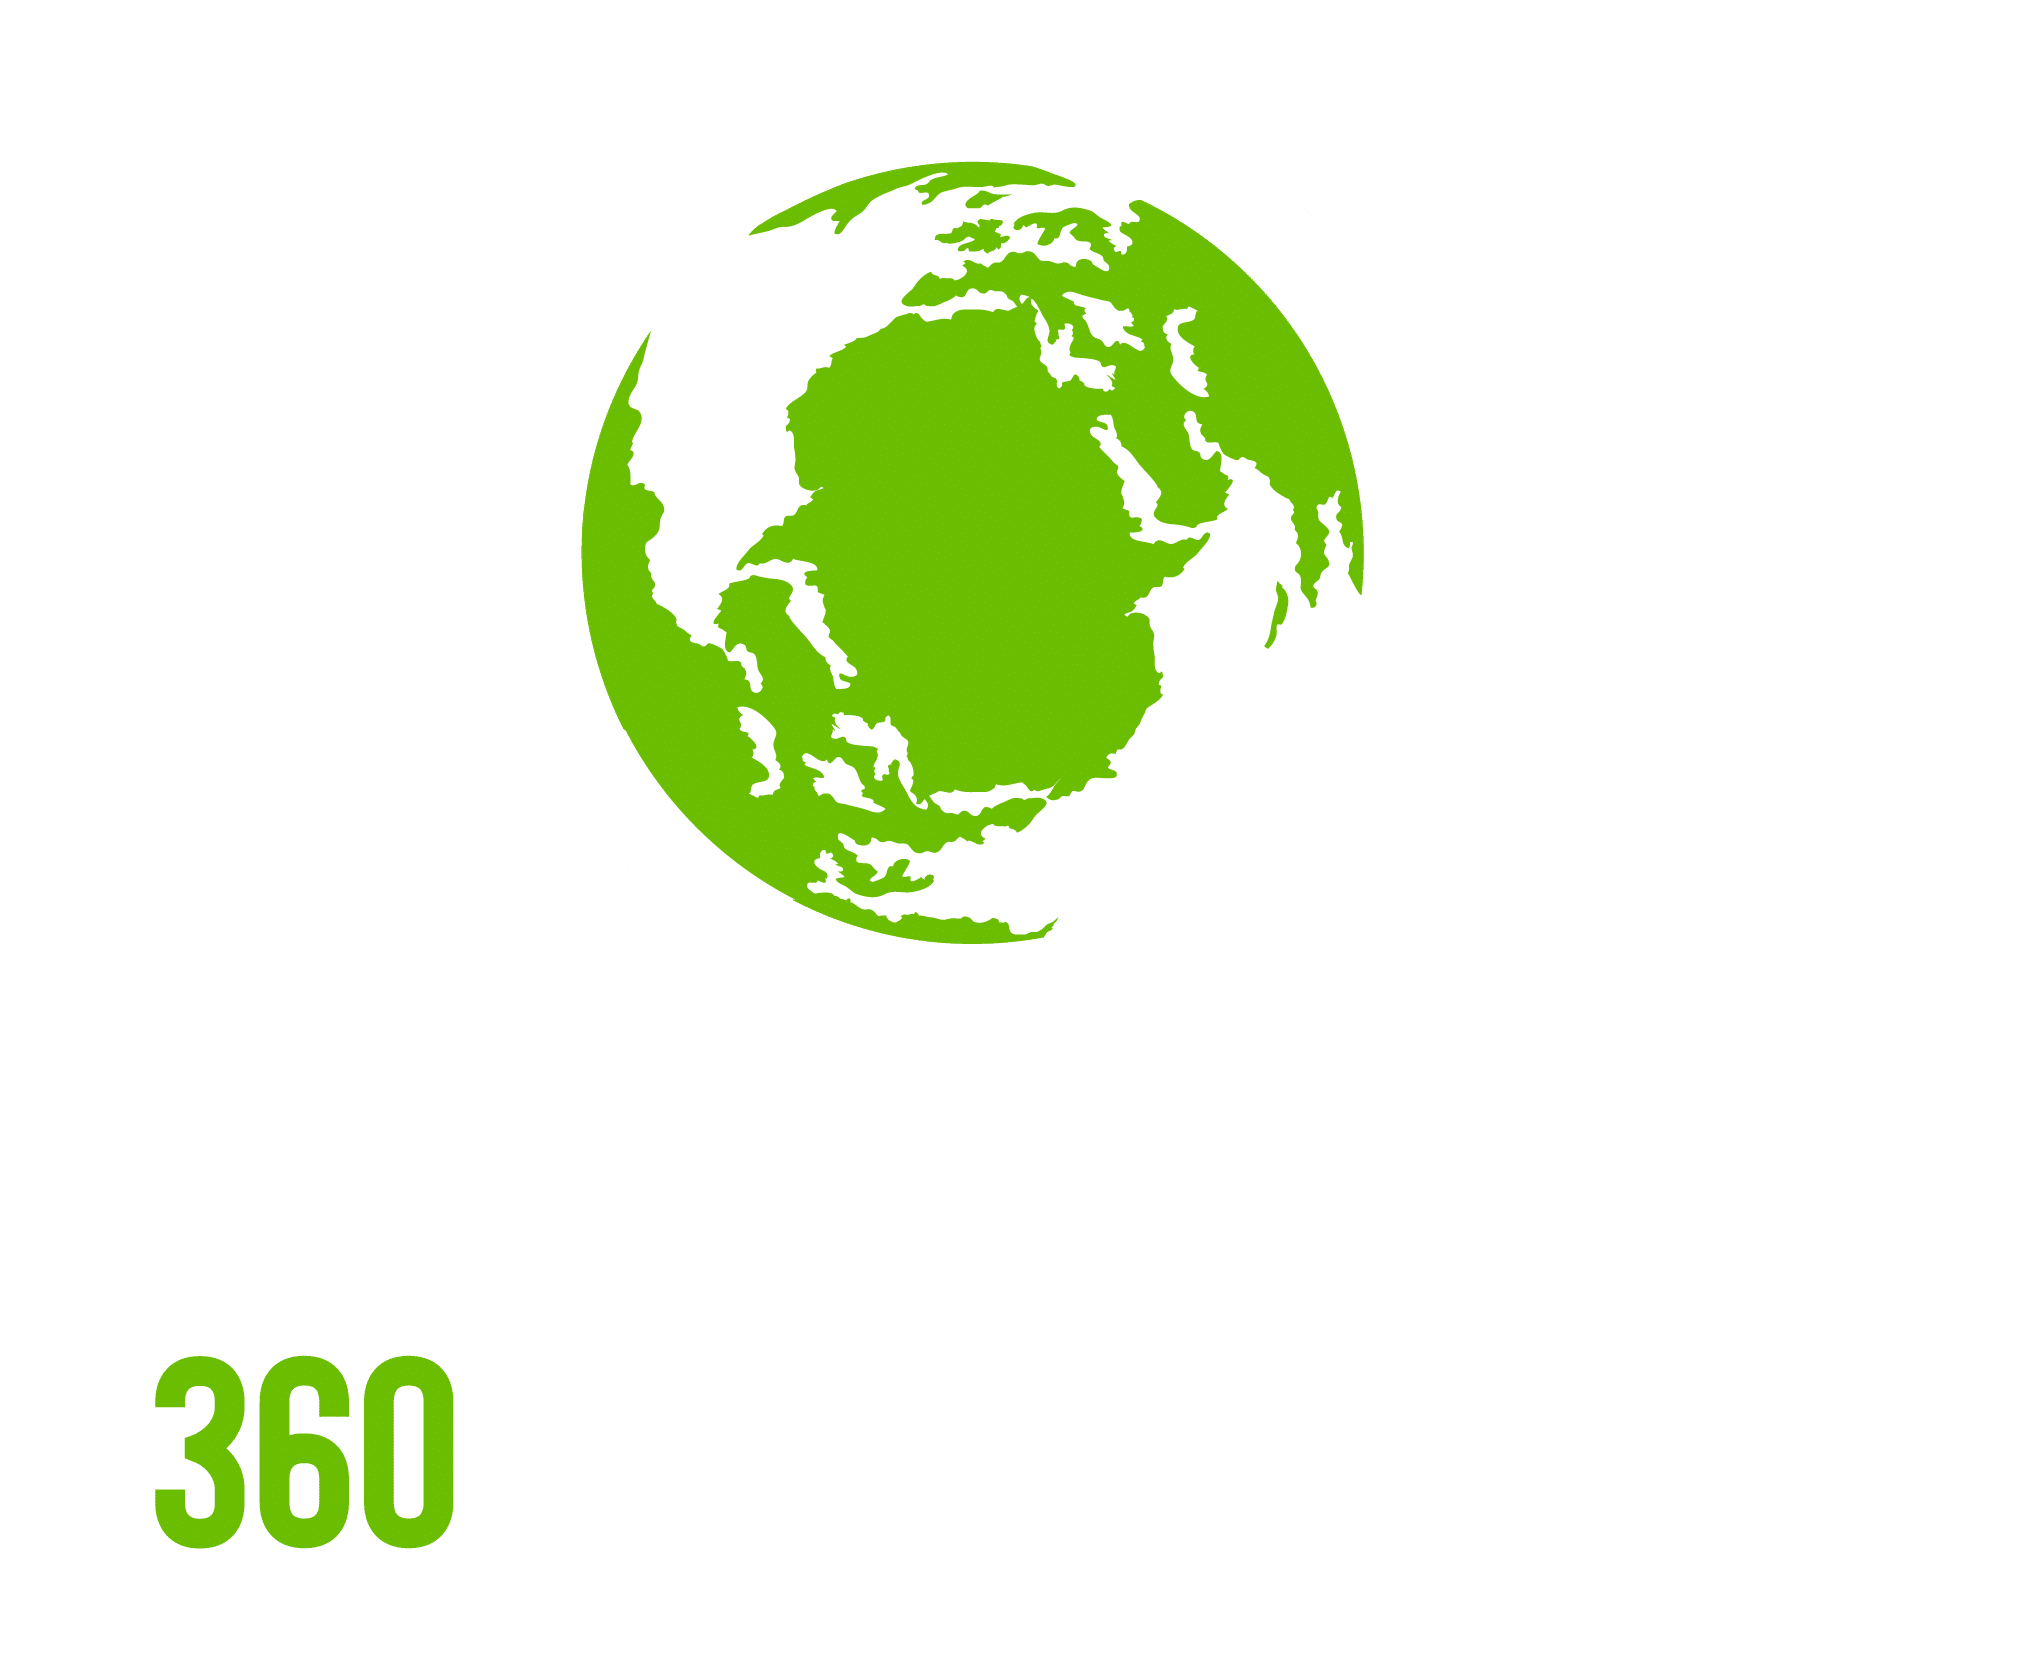 360GradGesundheit Logo